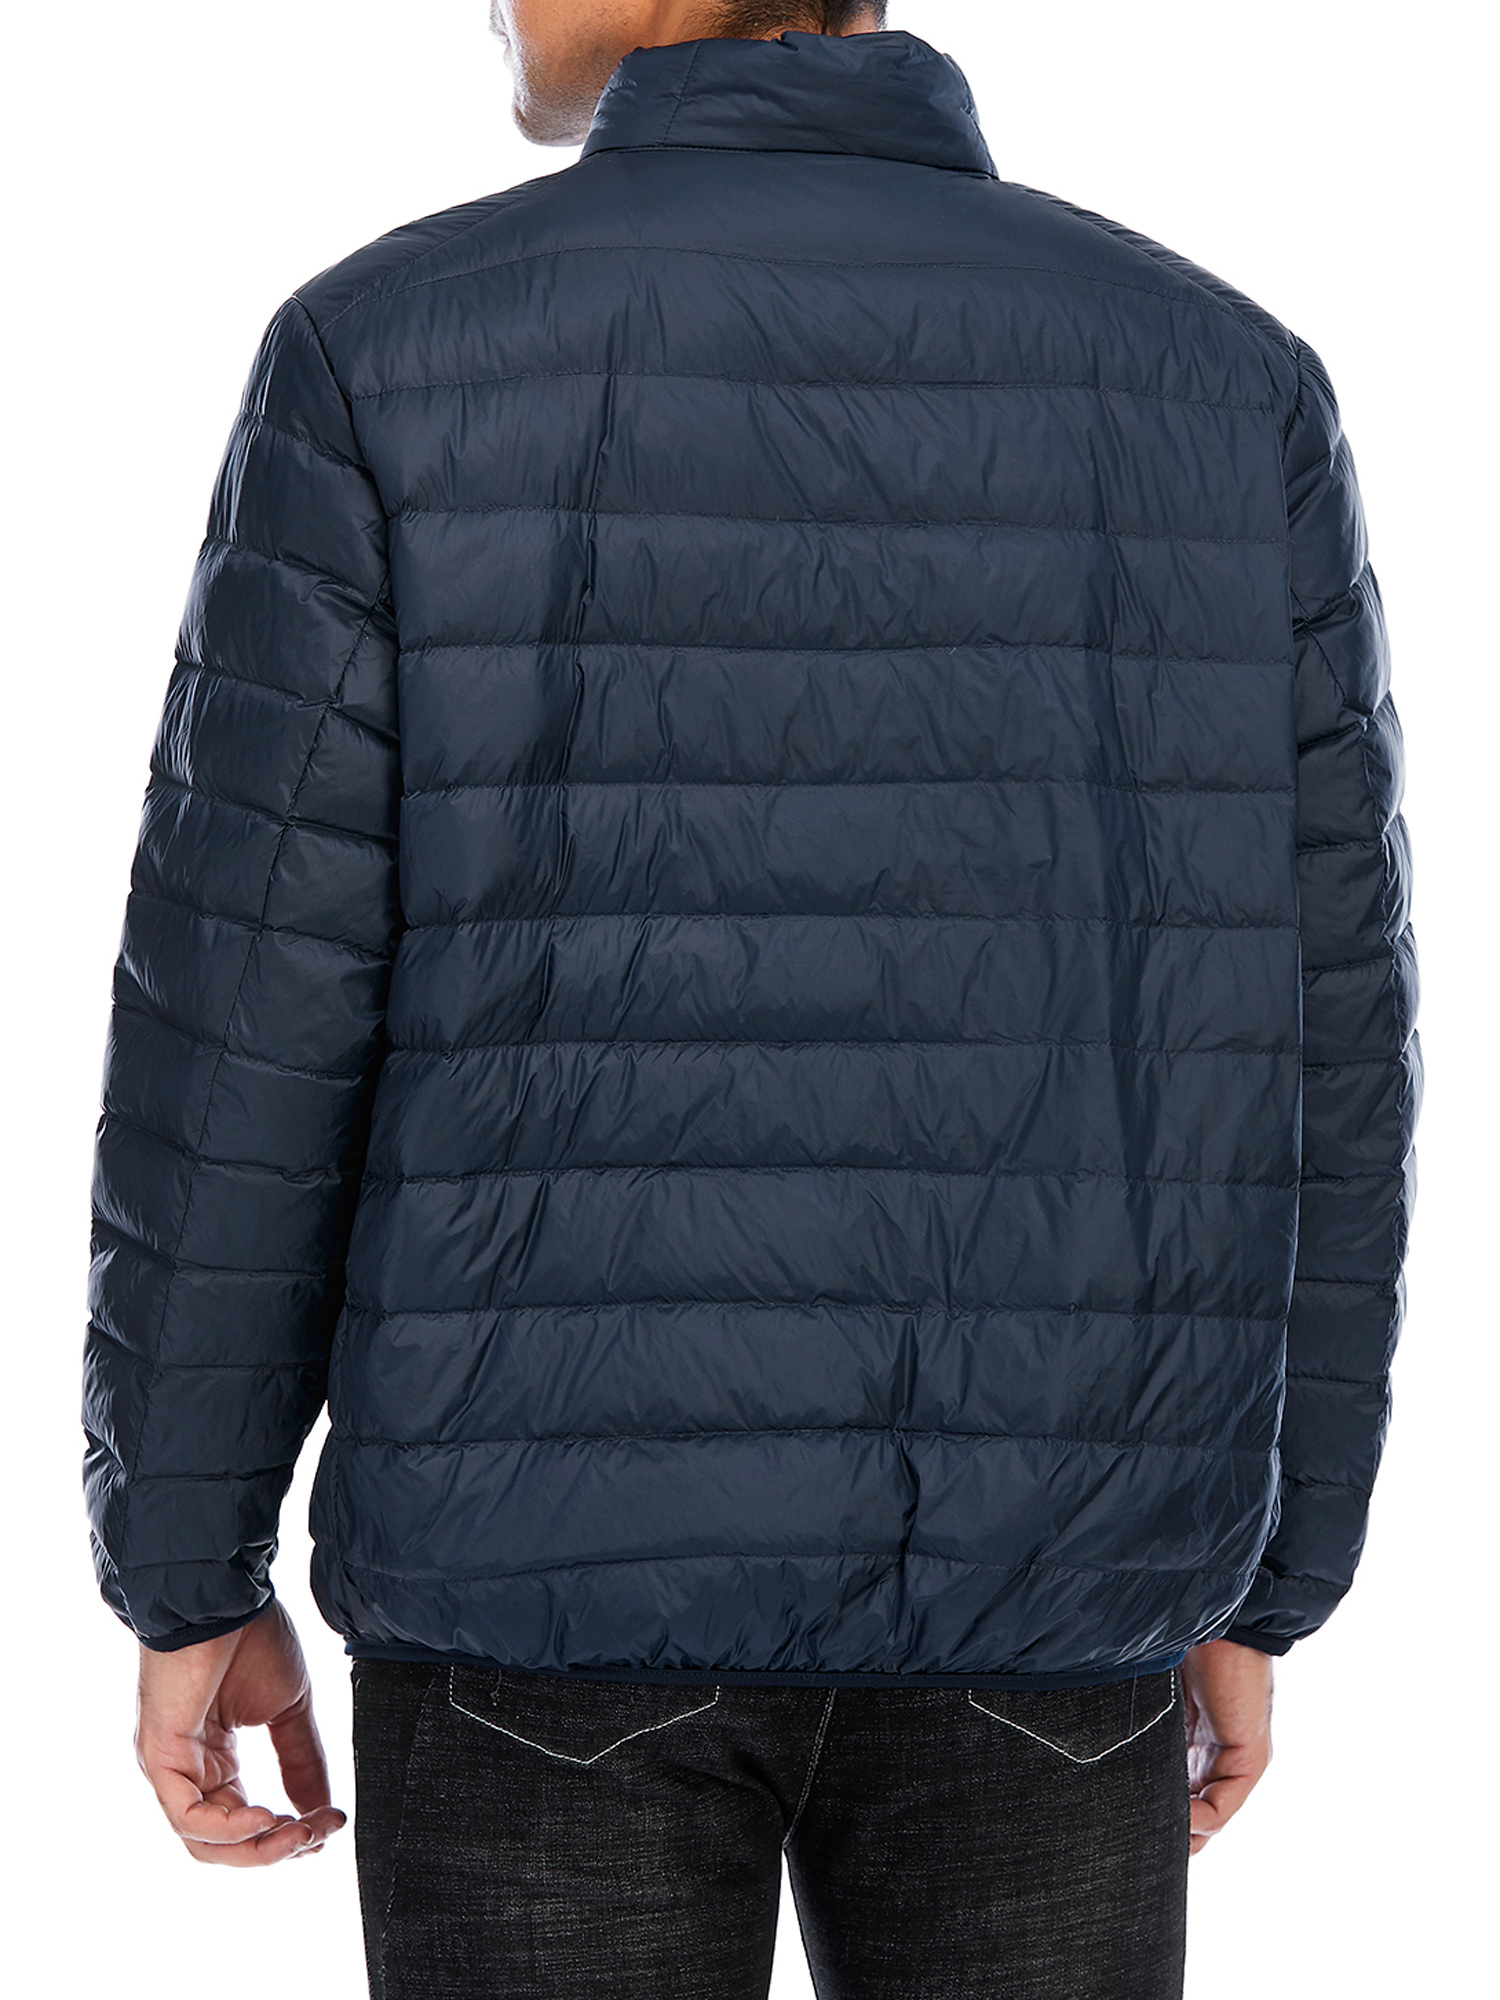 Men's Packable Down Jacket Winter Warm Jacket lightweight Zipper Jacket Puffer Bubble Coat Black Blue - image 5 of 7